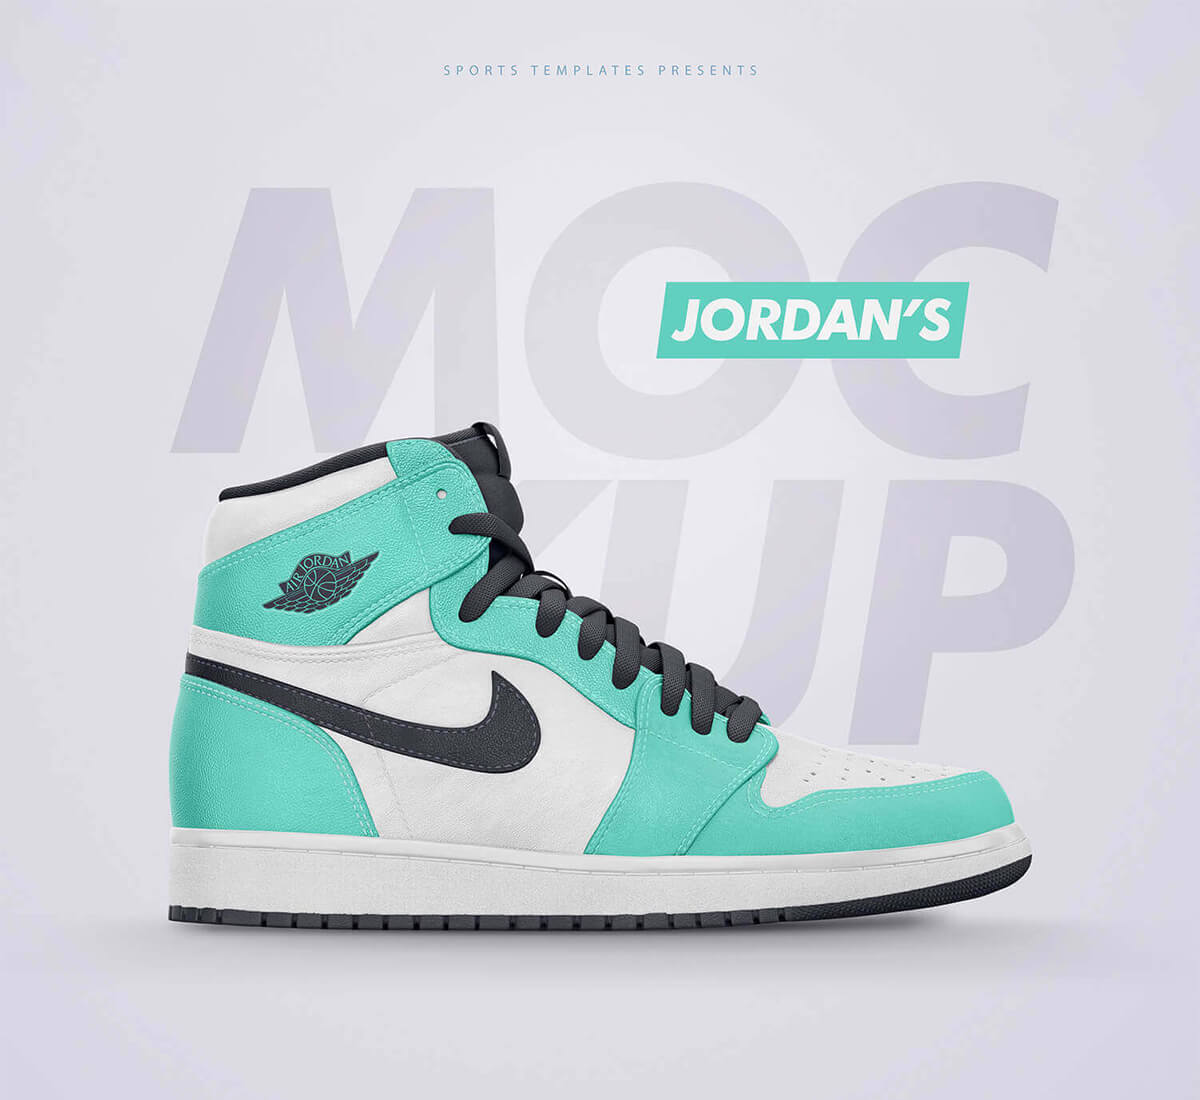 mint-Nike-Air-Jordans-Photoshop-mockup-template